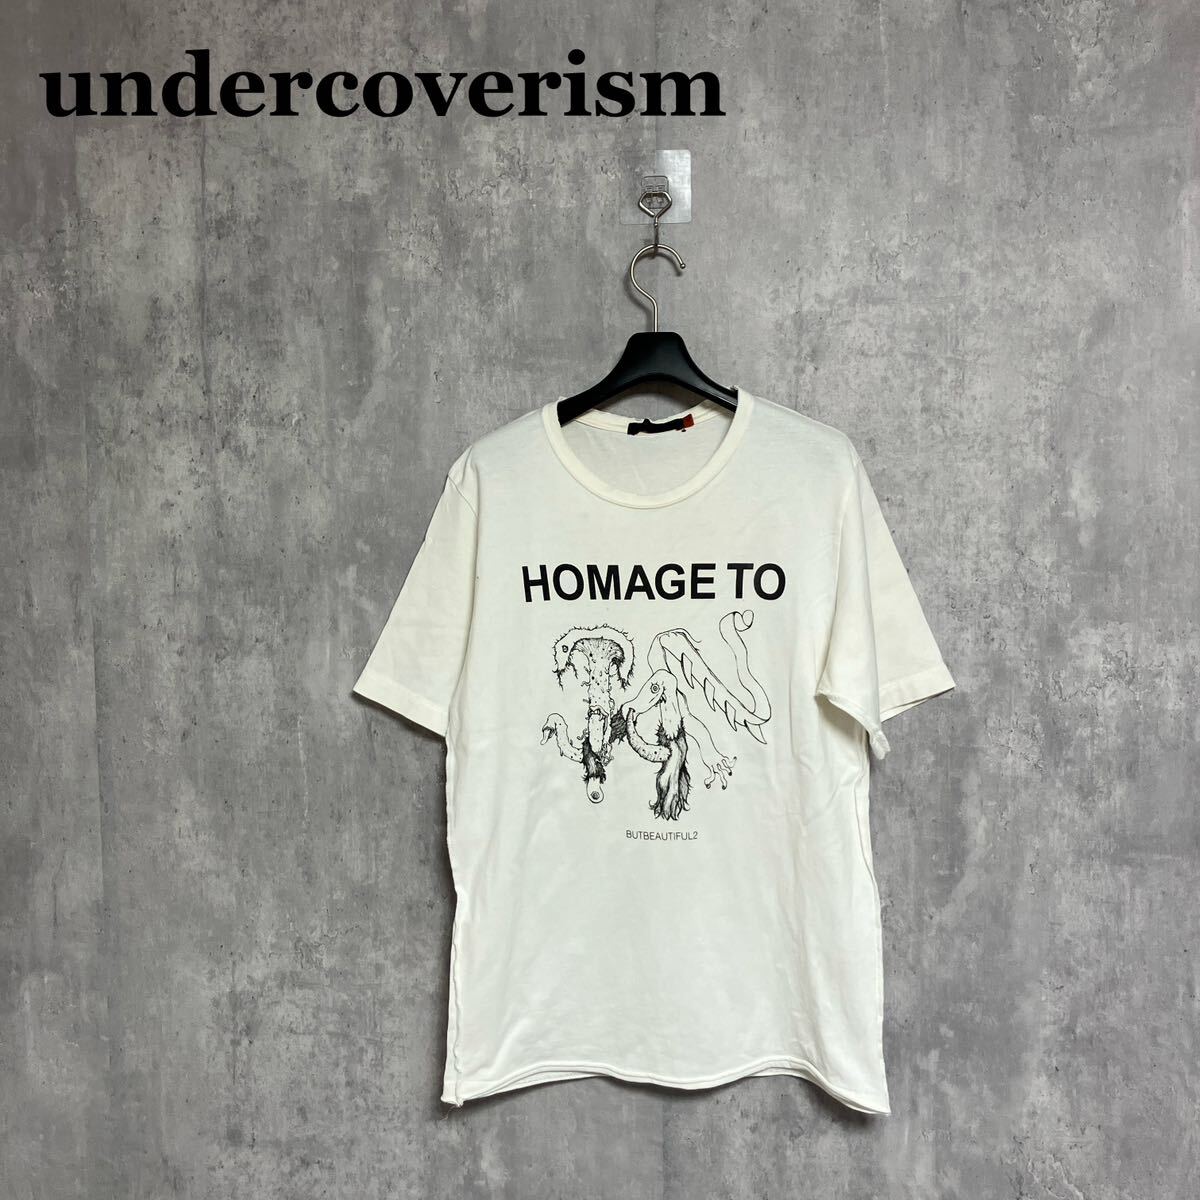 UNDER COVER ISM HOMAGETO короткий рукав футболка 2 BUTBEAUTIFUL2 undercover 